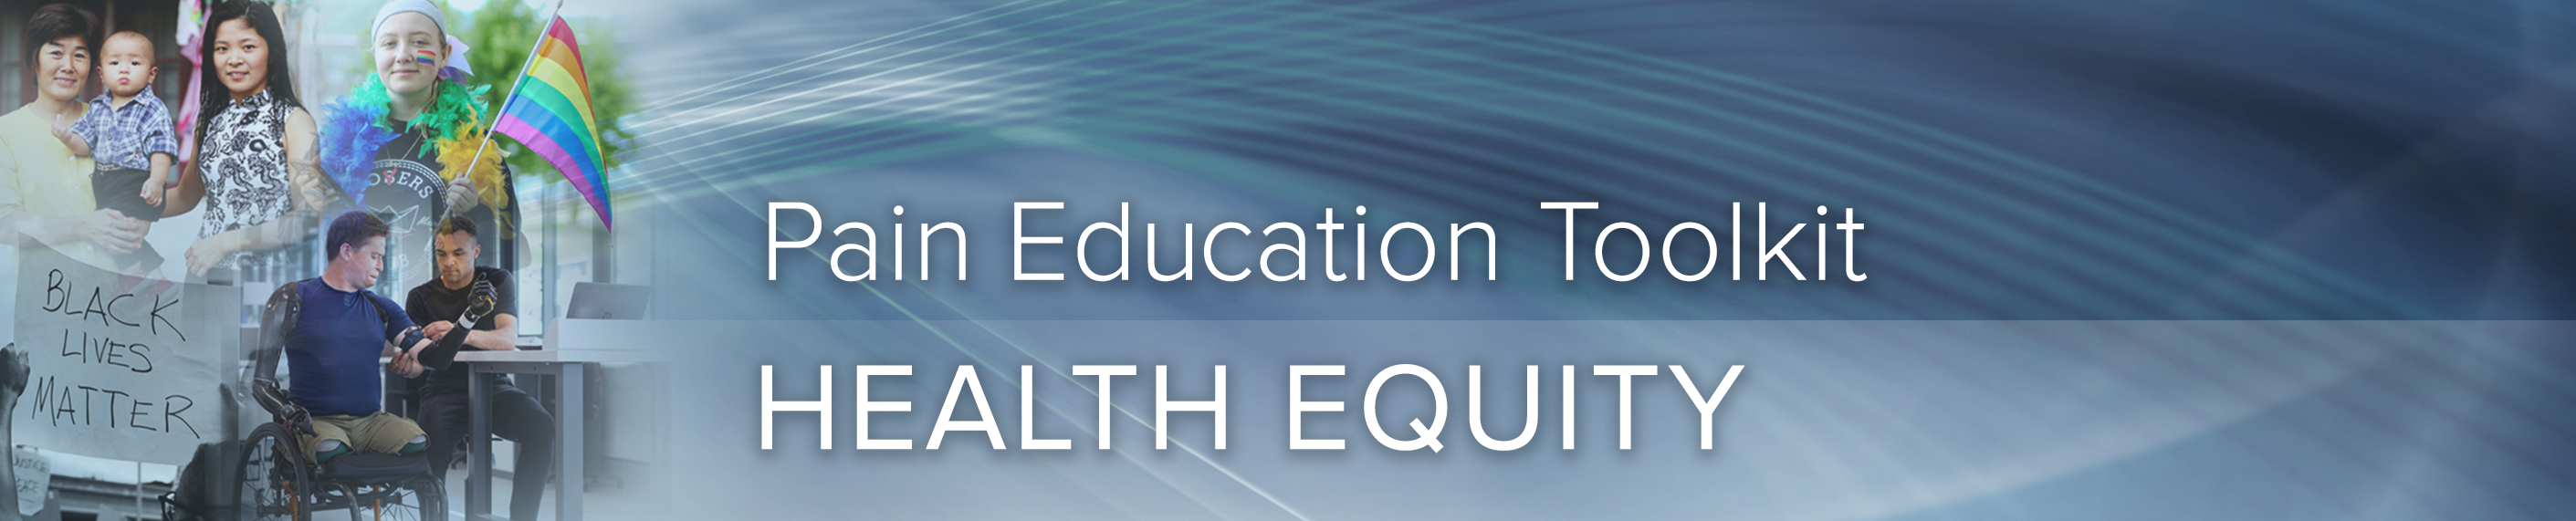 Health equity